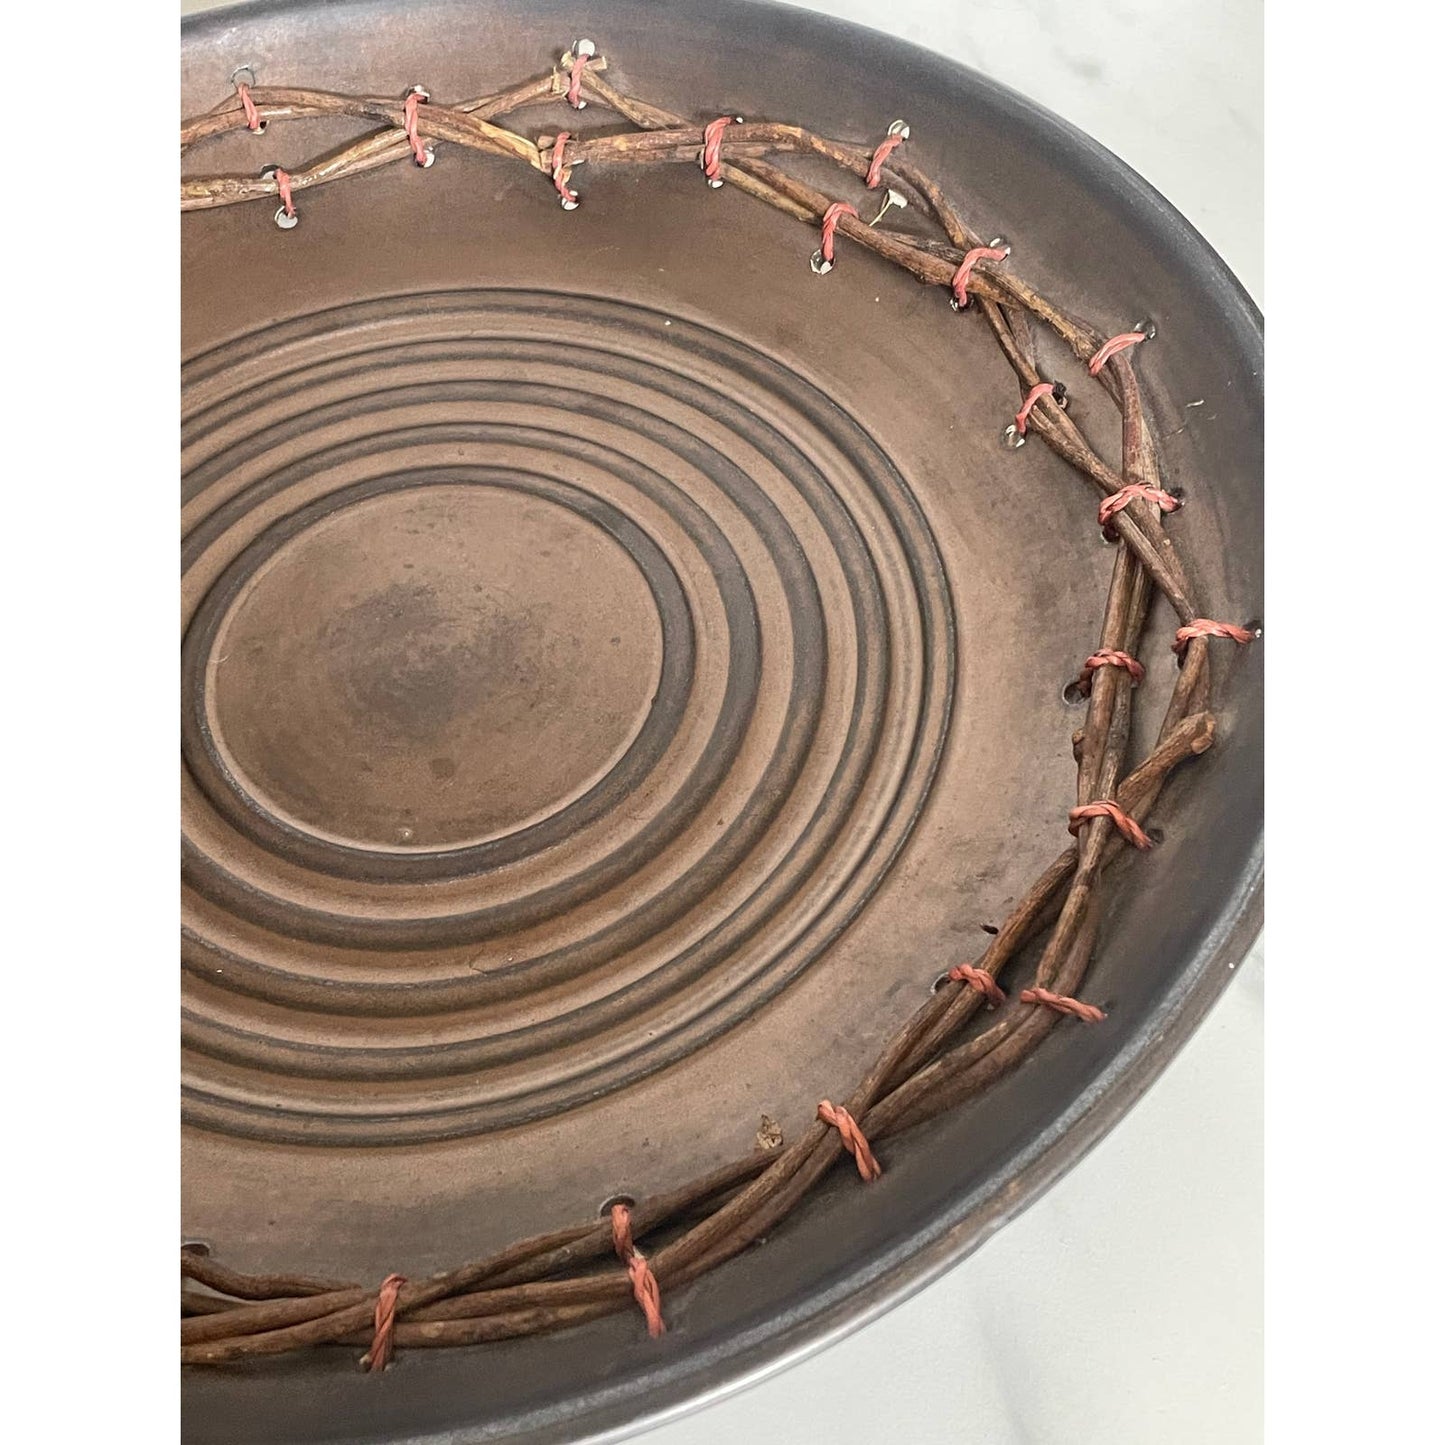 Pfaltzgraff Matica Oxidized Ceramic Bowl with reed weaved rim